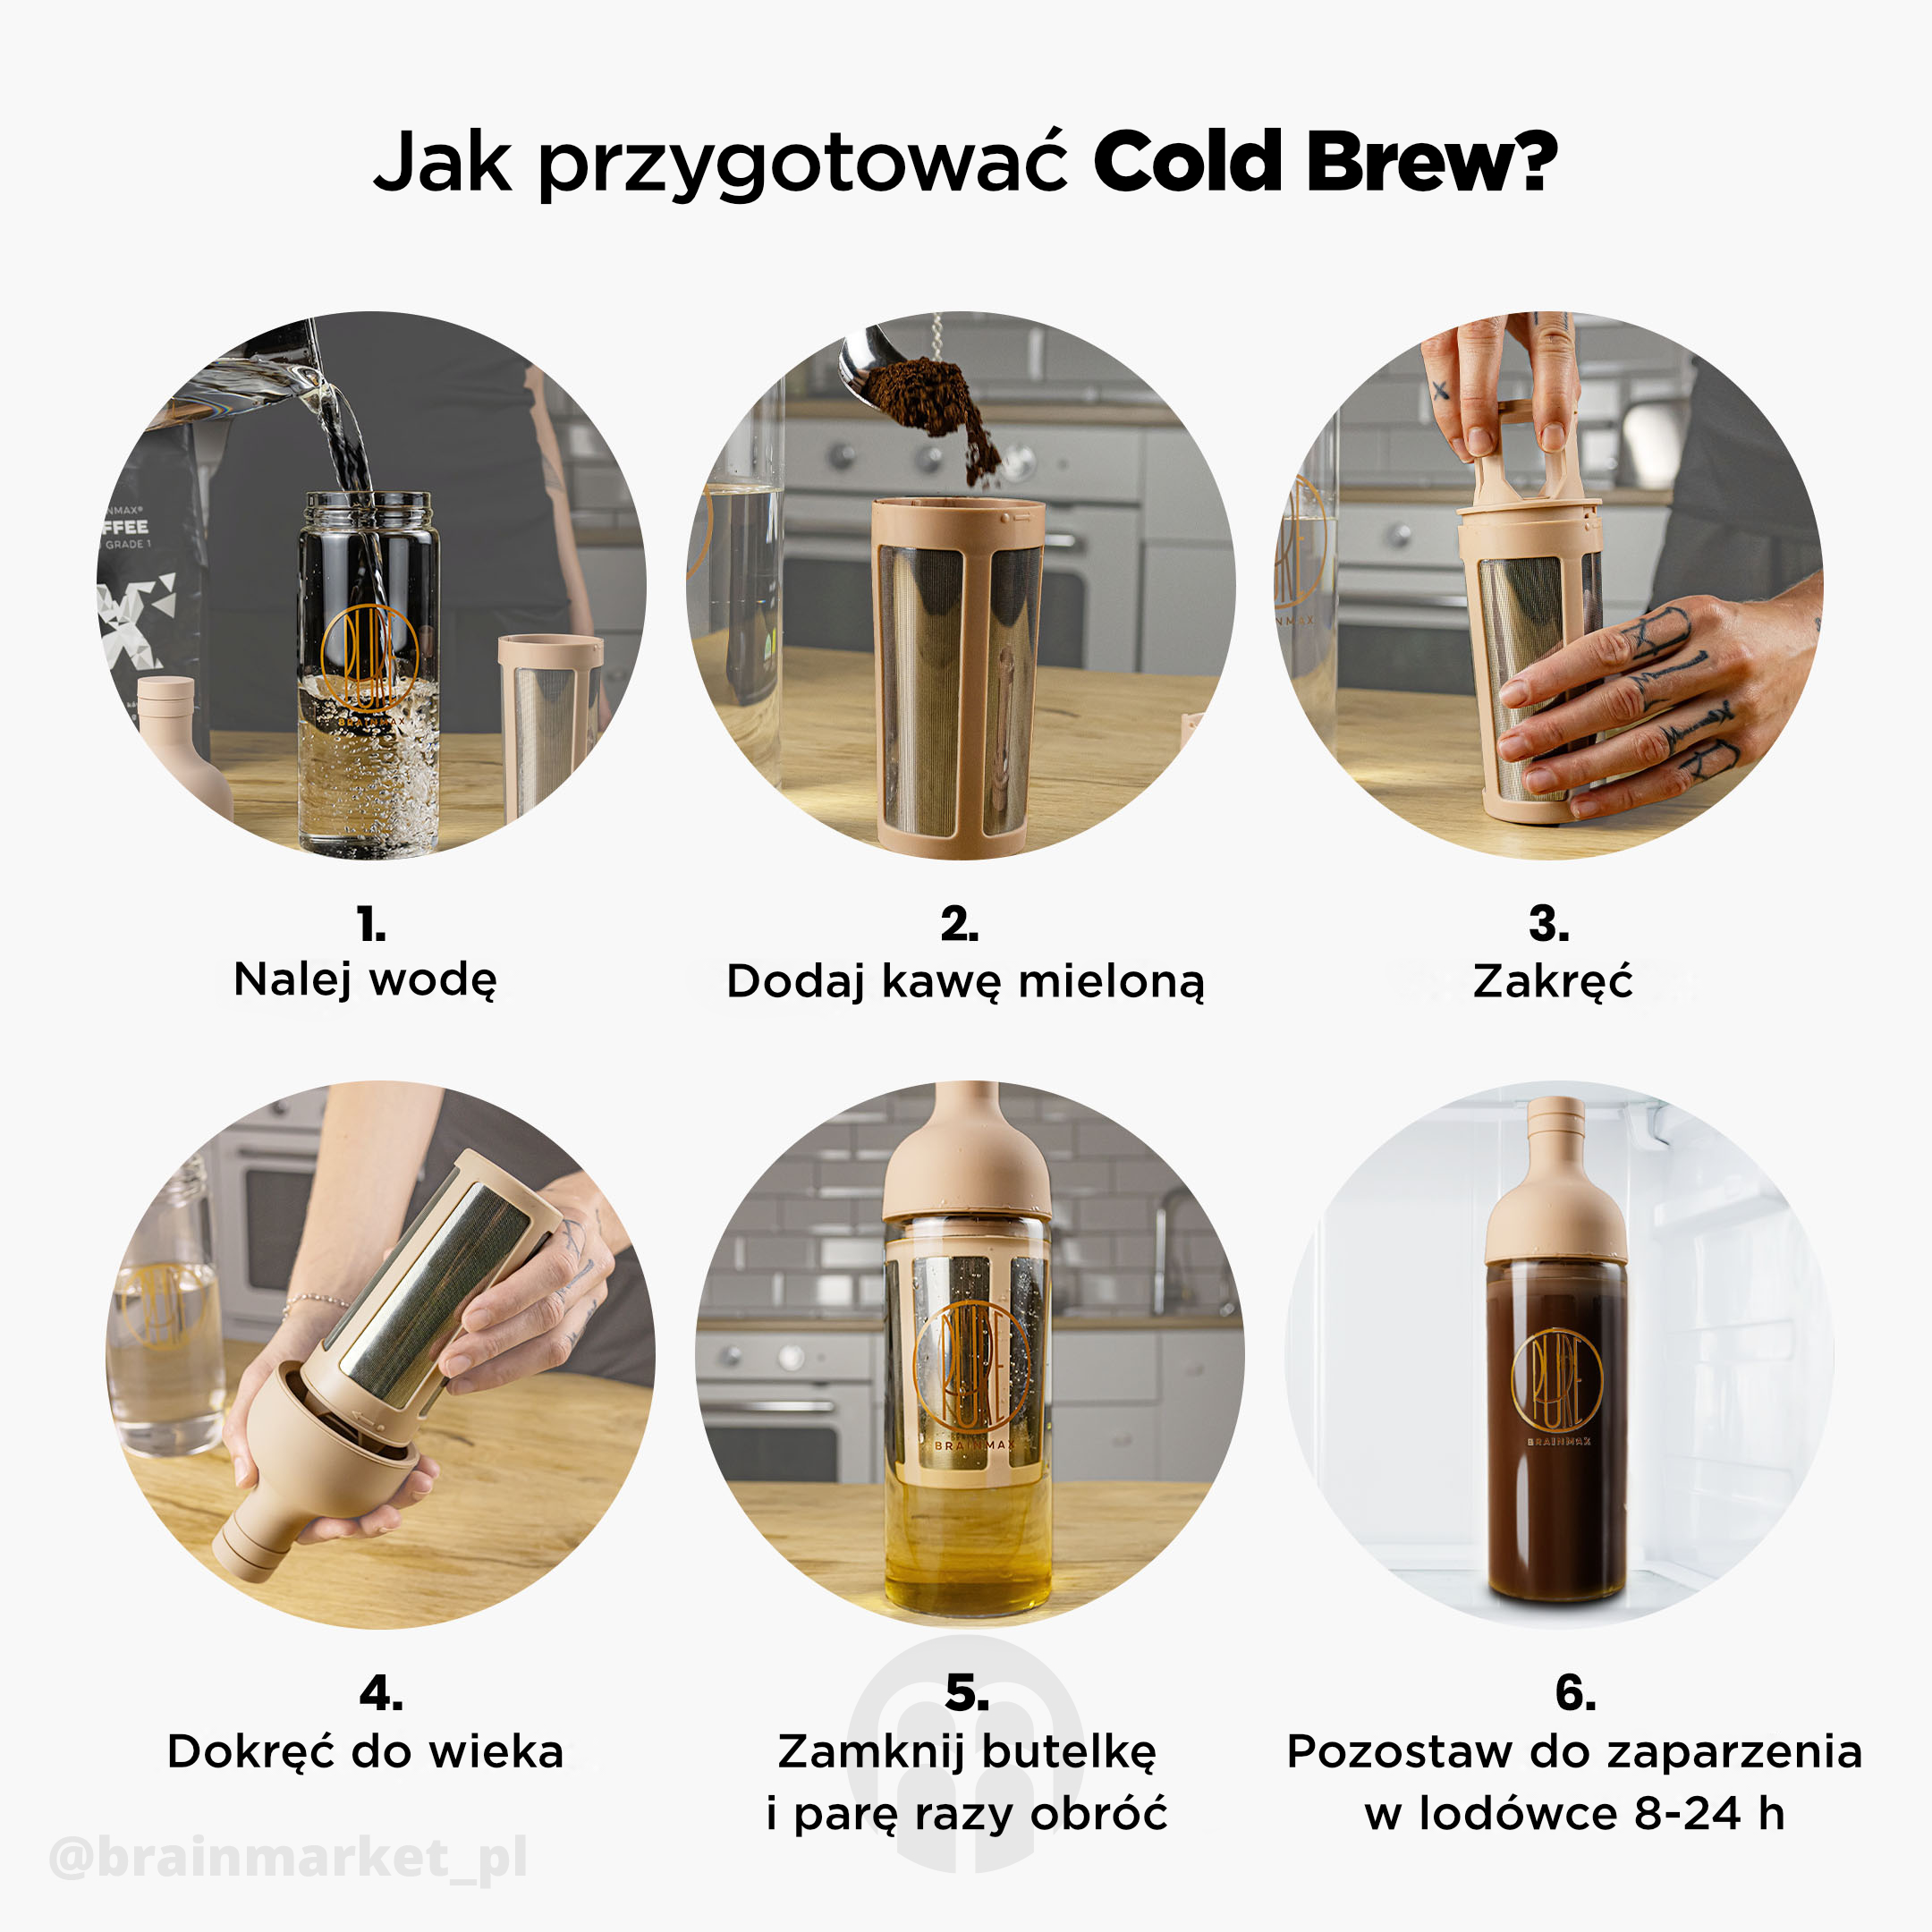 Jak pripravit Cold brew_infografika_pl-2